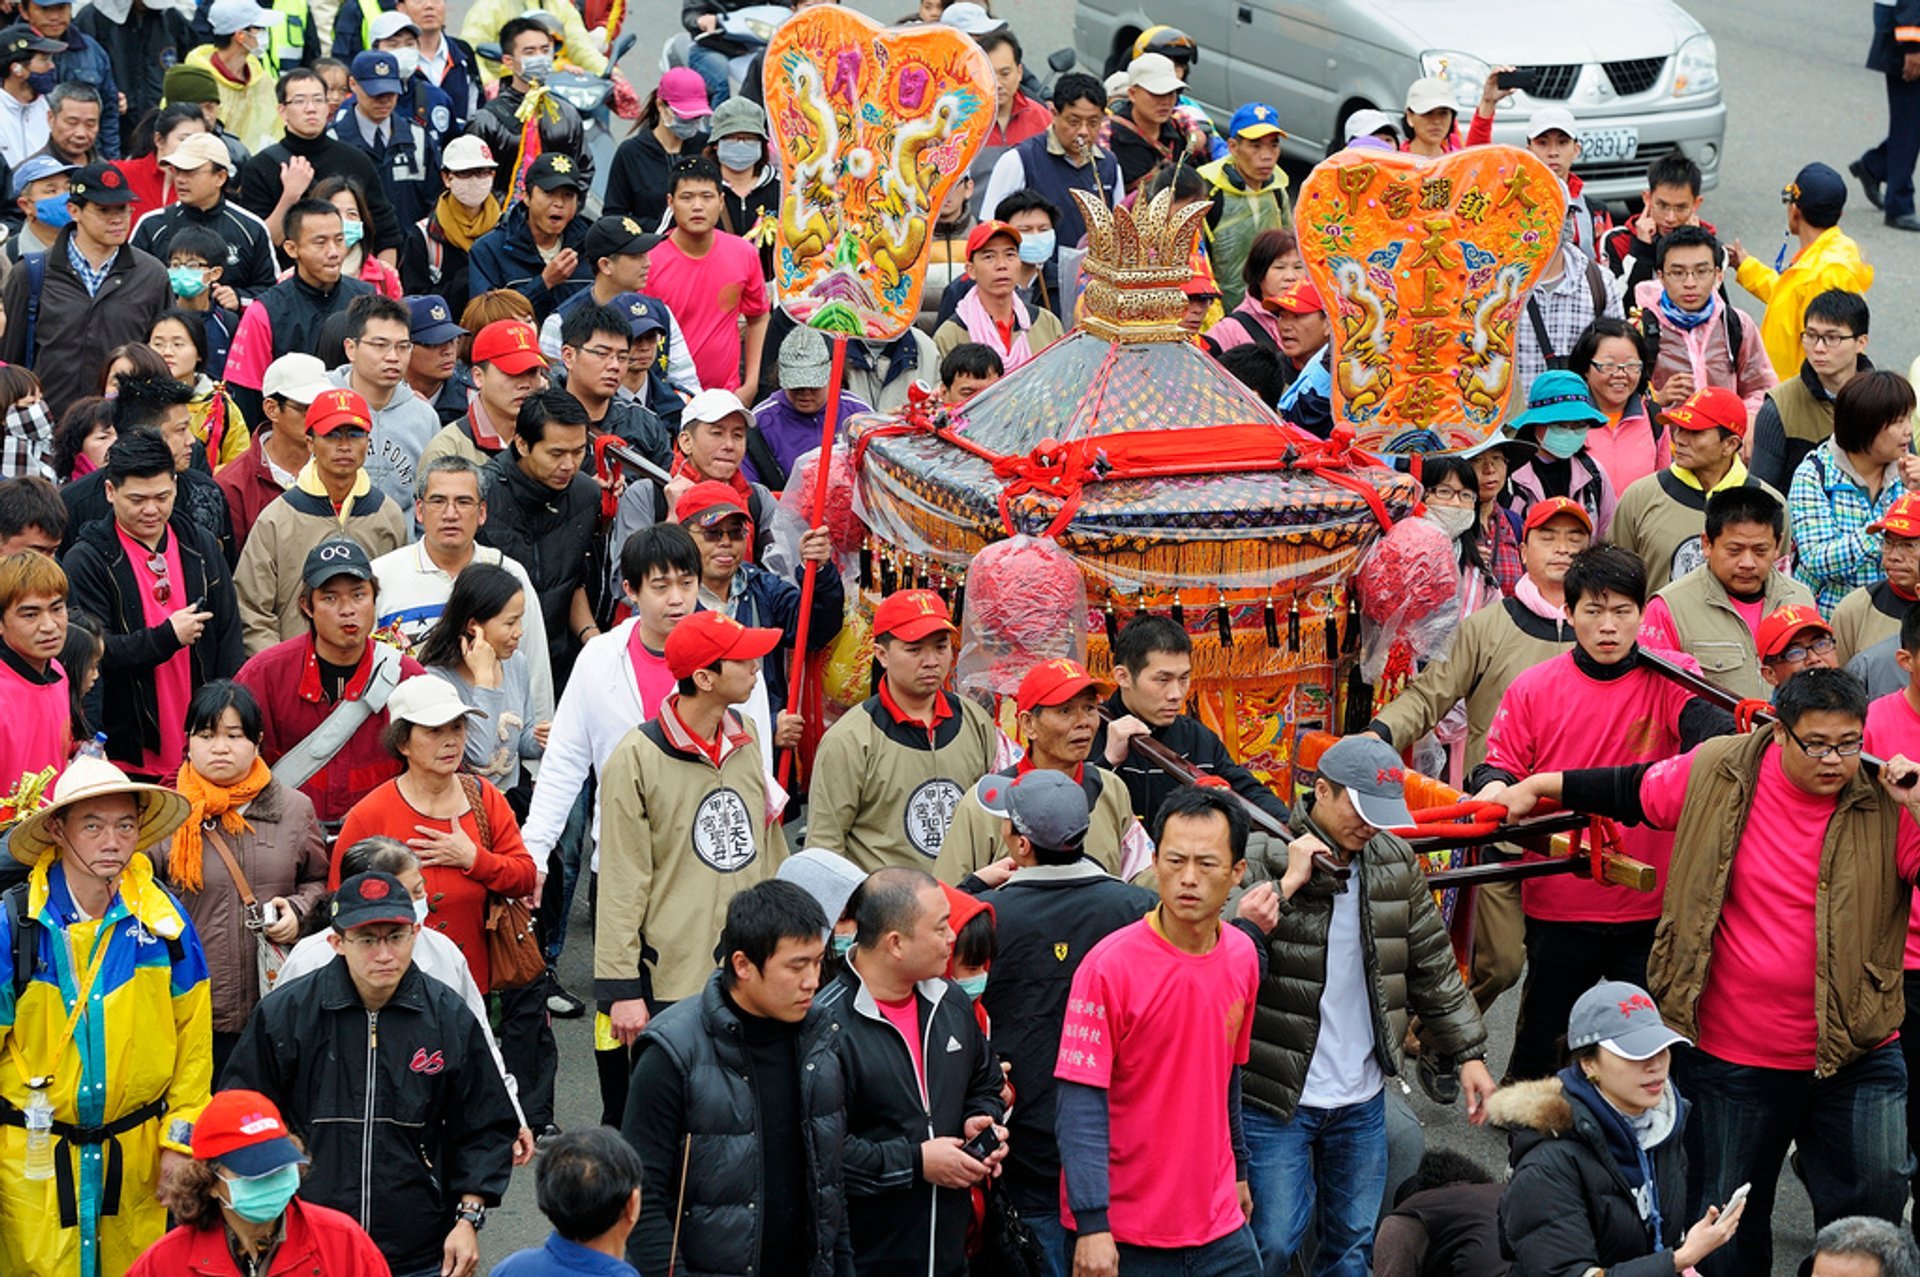 Taichung City Mazu International Festival